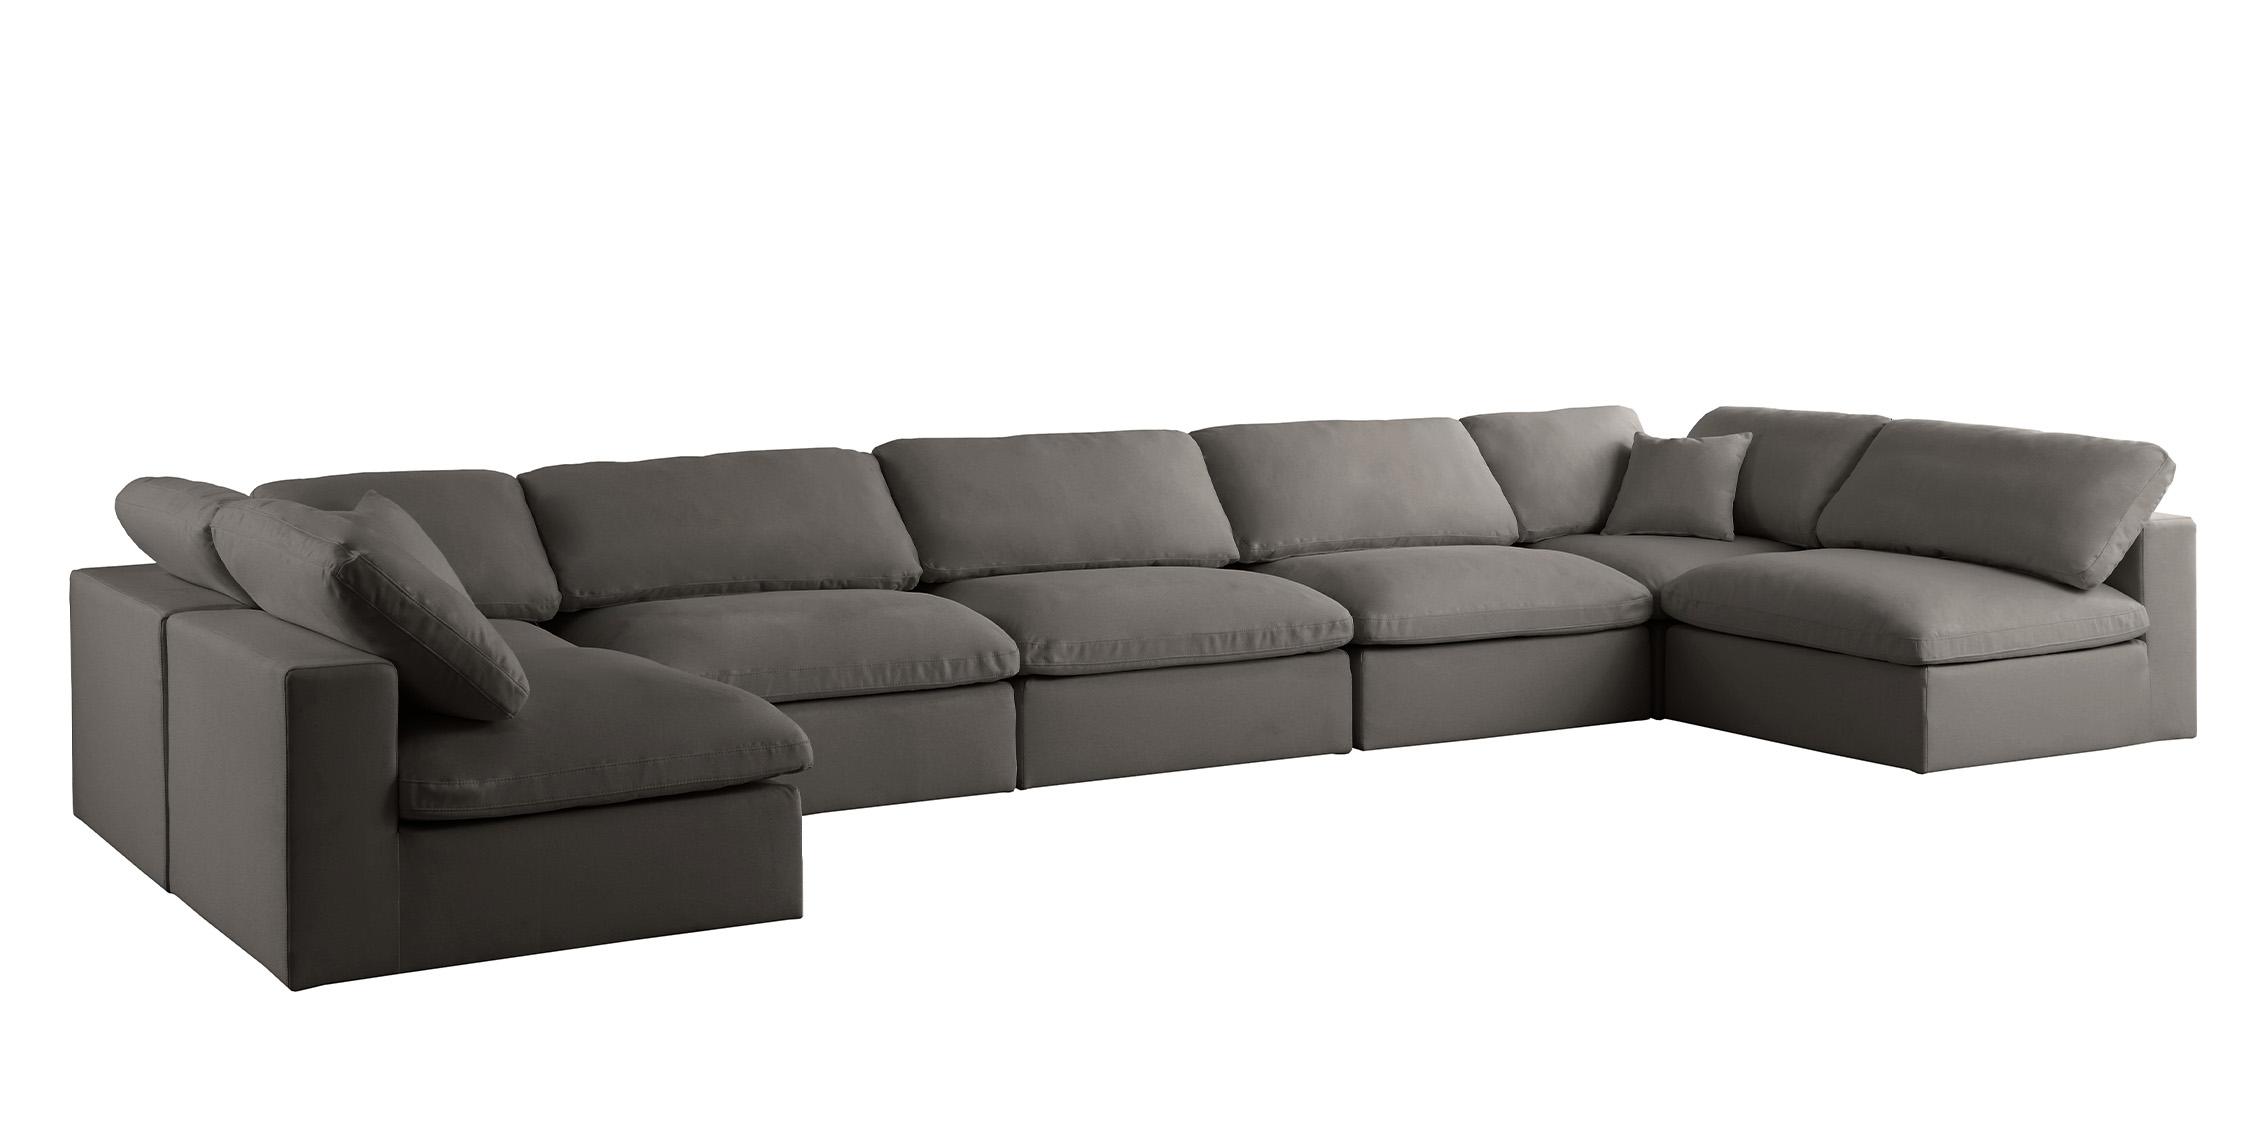 Contemporary, Modern Modular Sectional Sofa 602Grey-Sec7B 602Grey-Sec7B in Gray Fabric